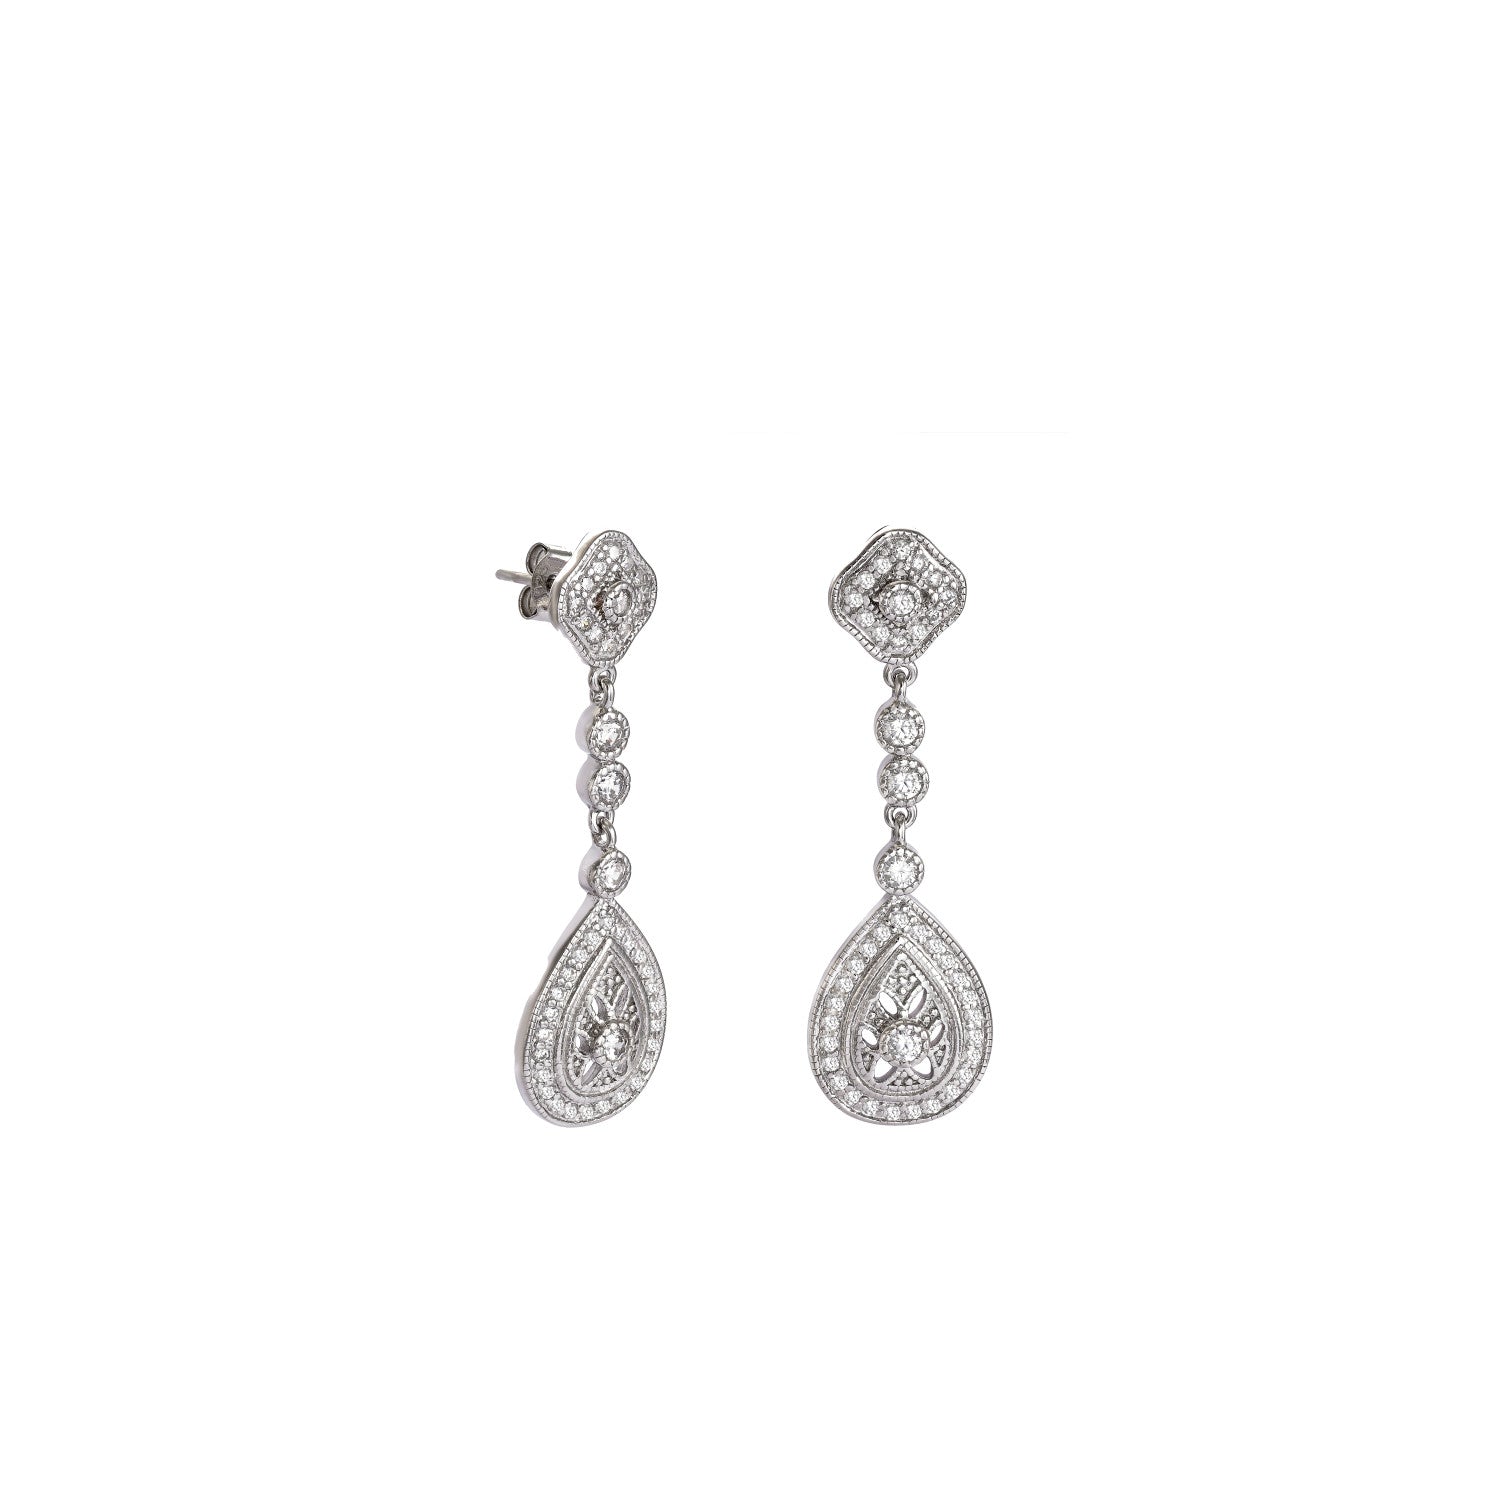 Earrings bridal swarovski drop earrings with zirconia design